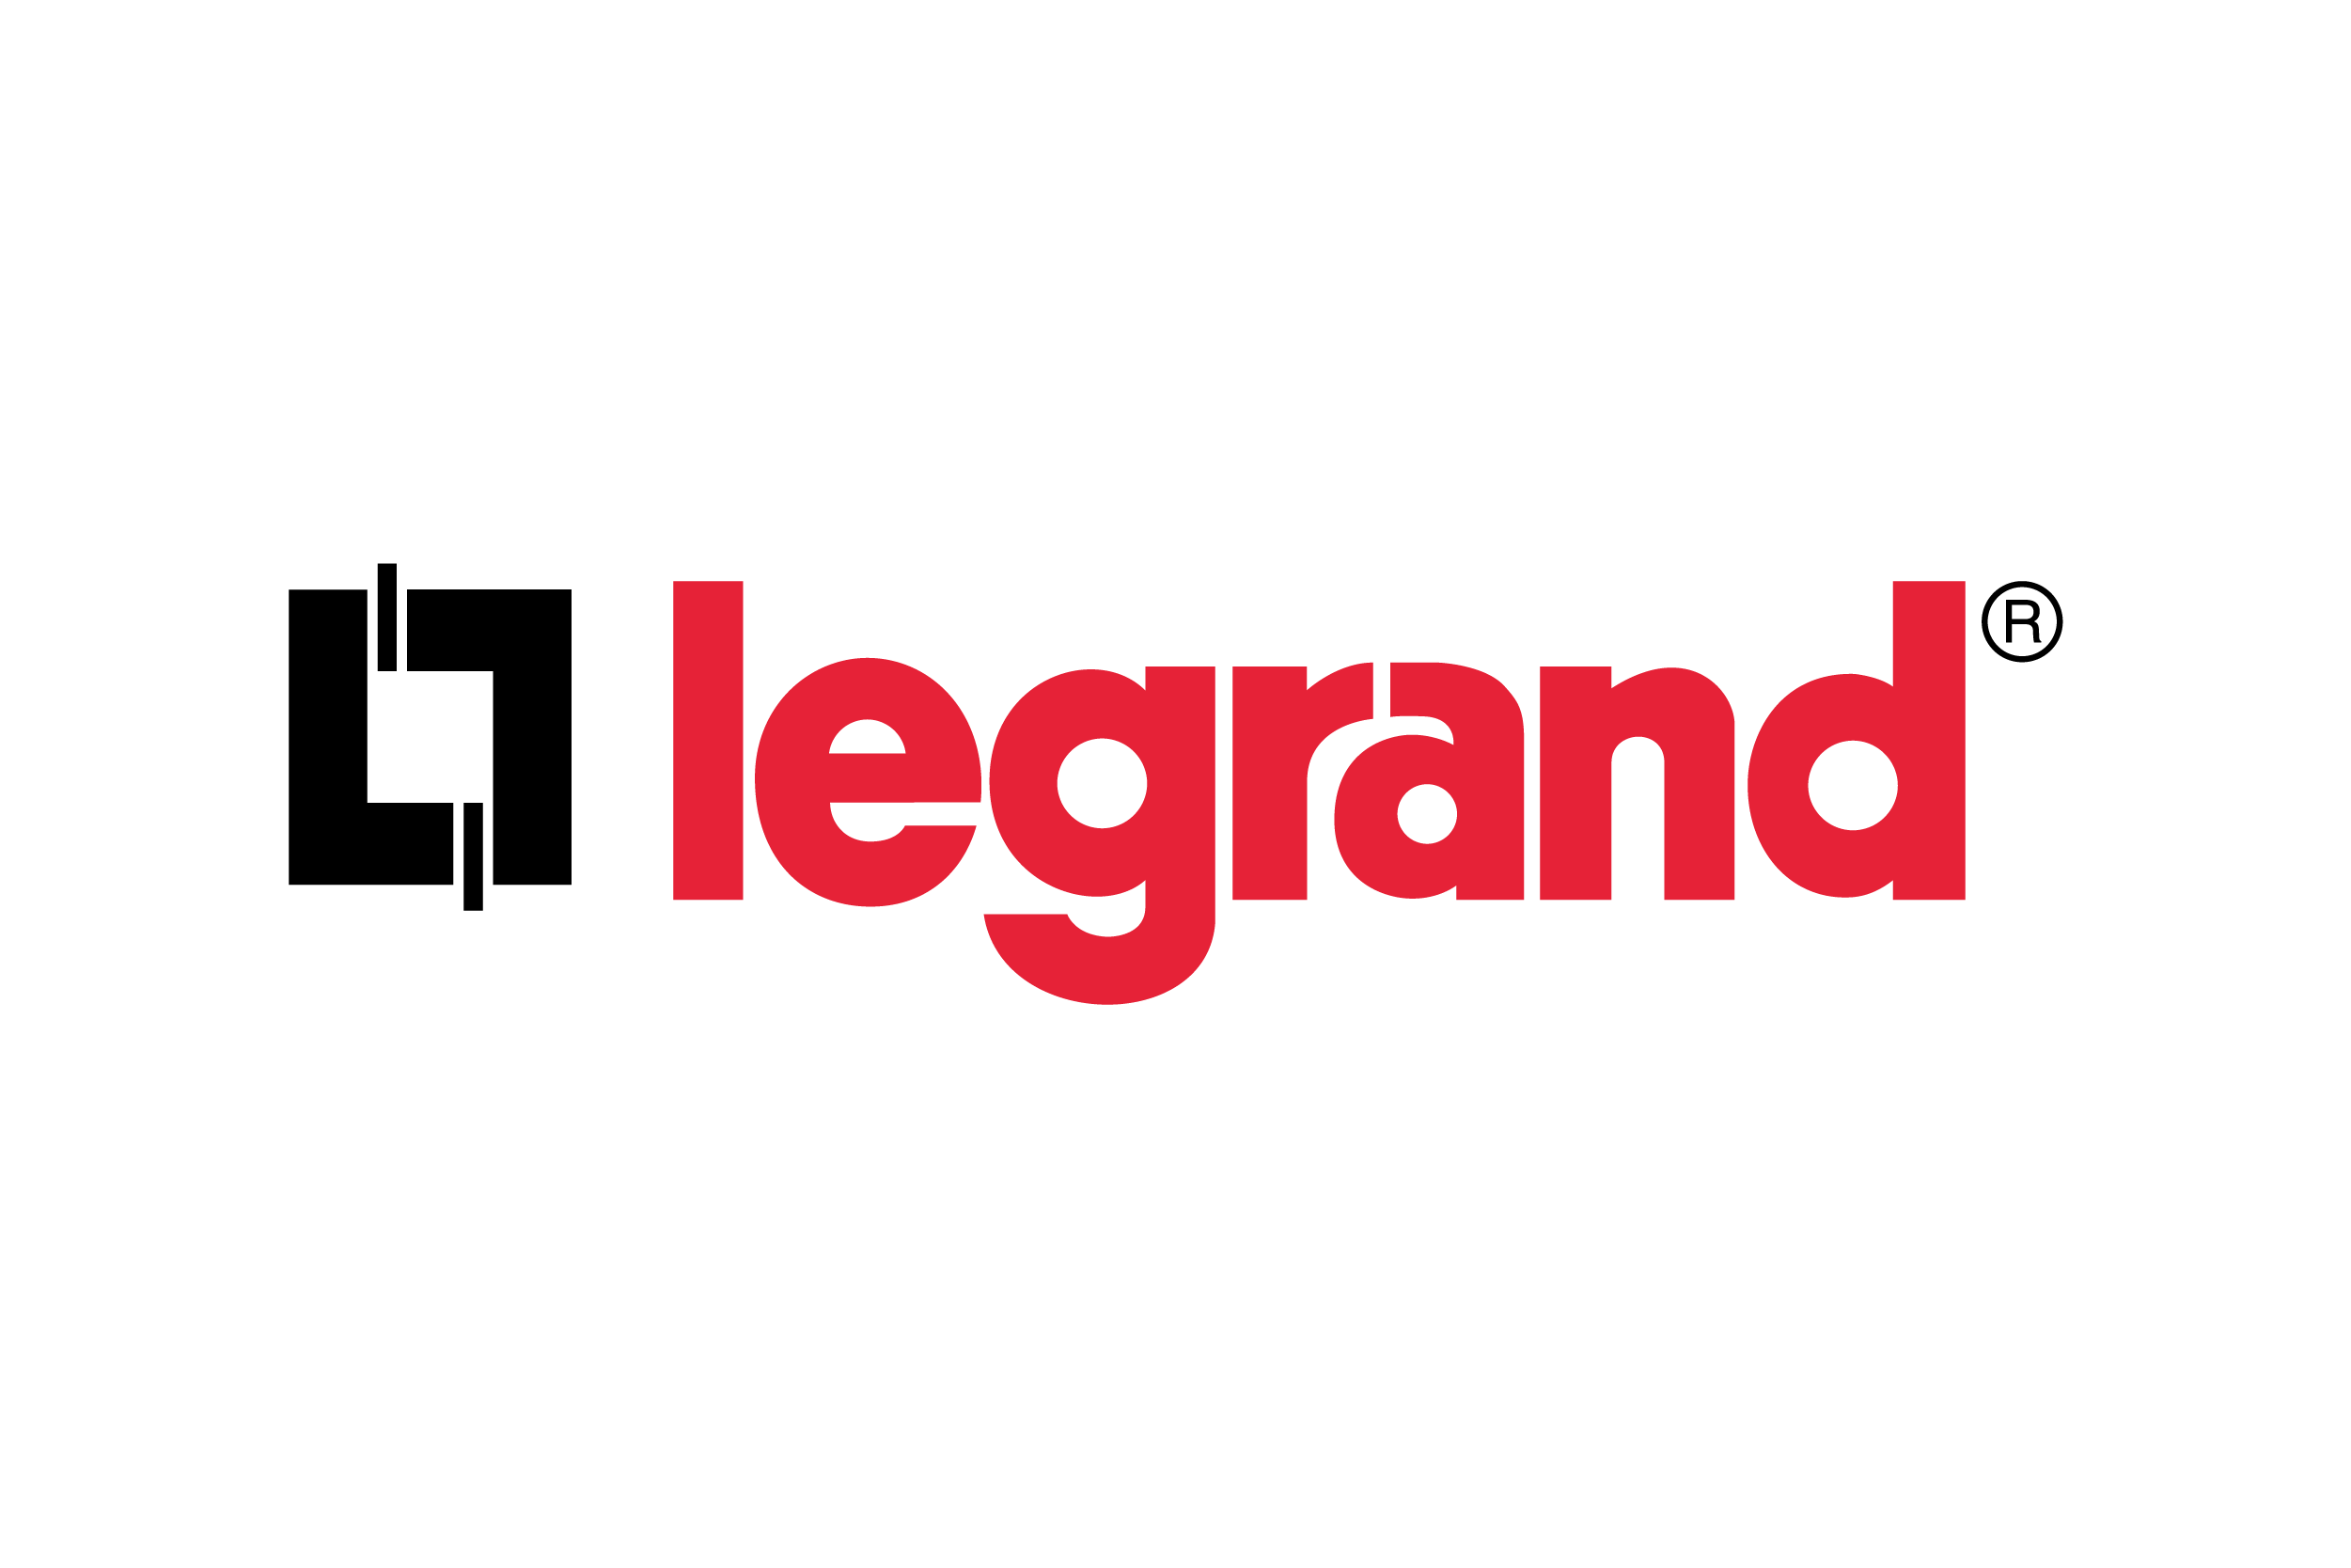 logo Legrand